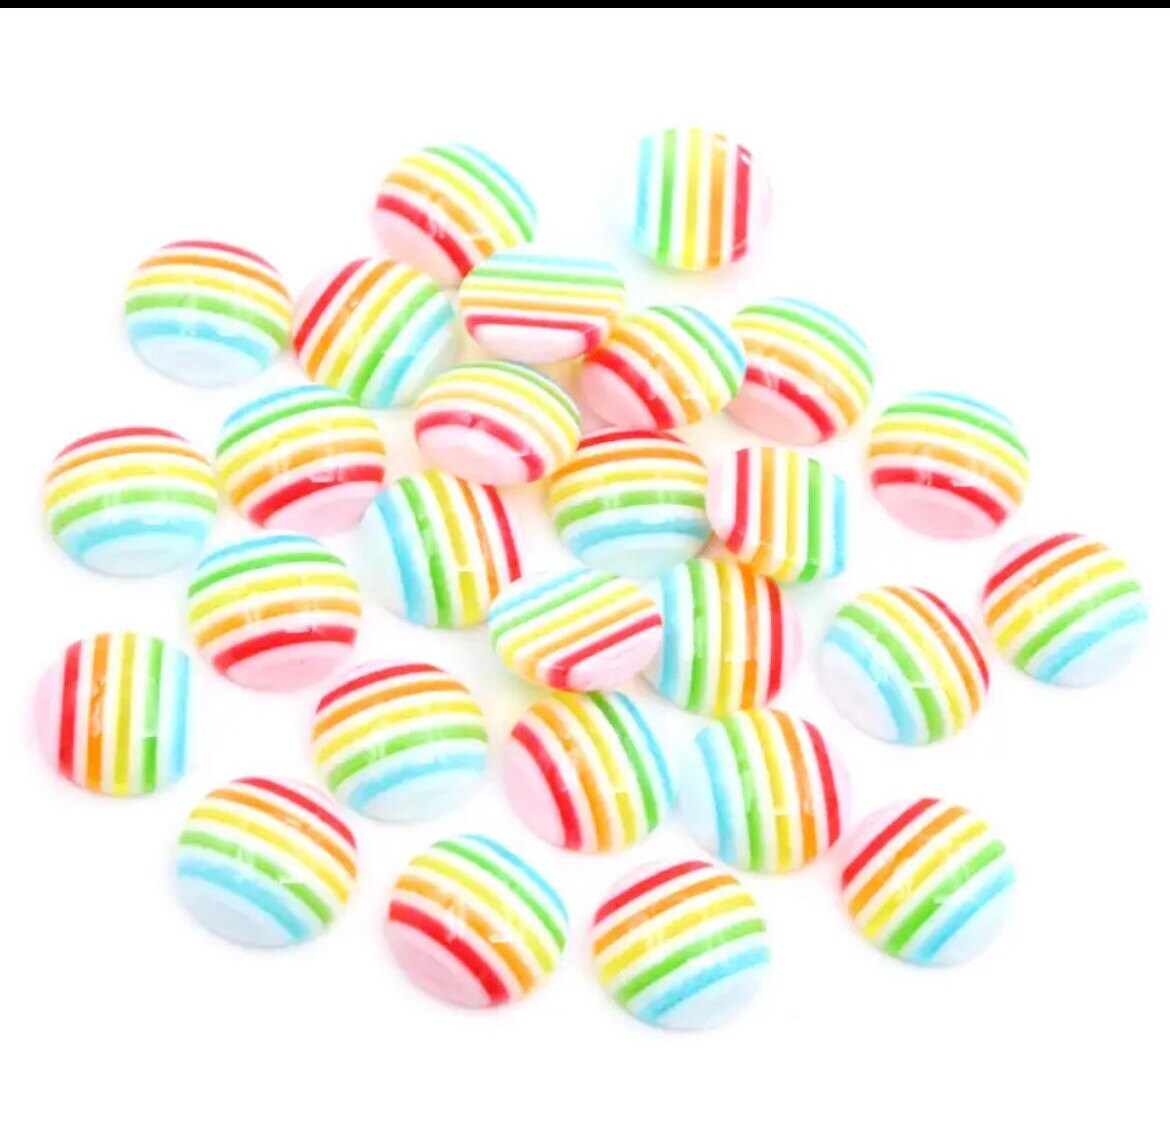 Round pastel rainbow striped cabochons, 12mm